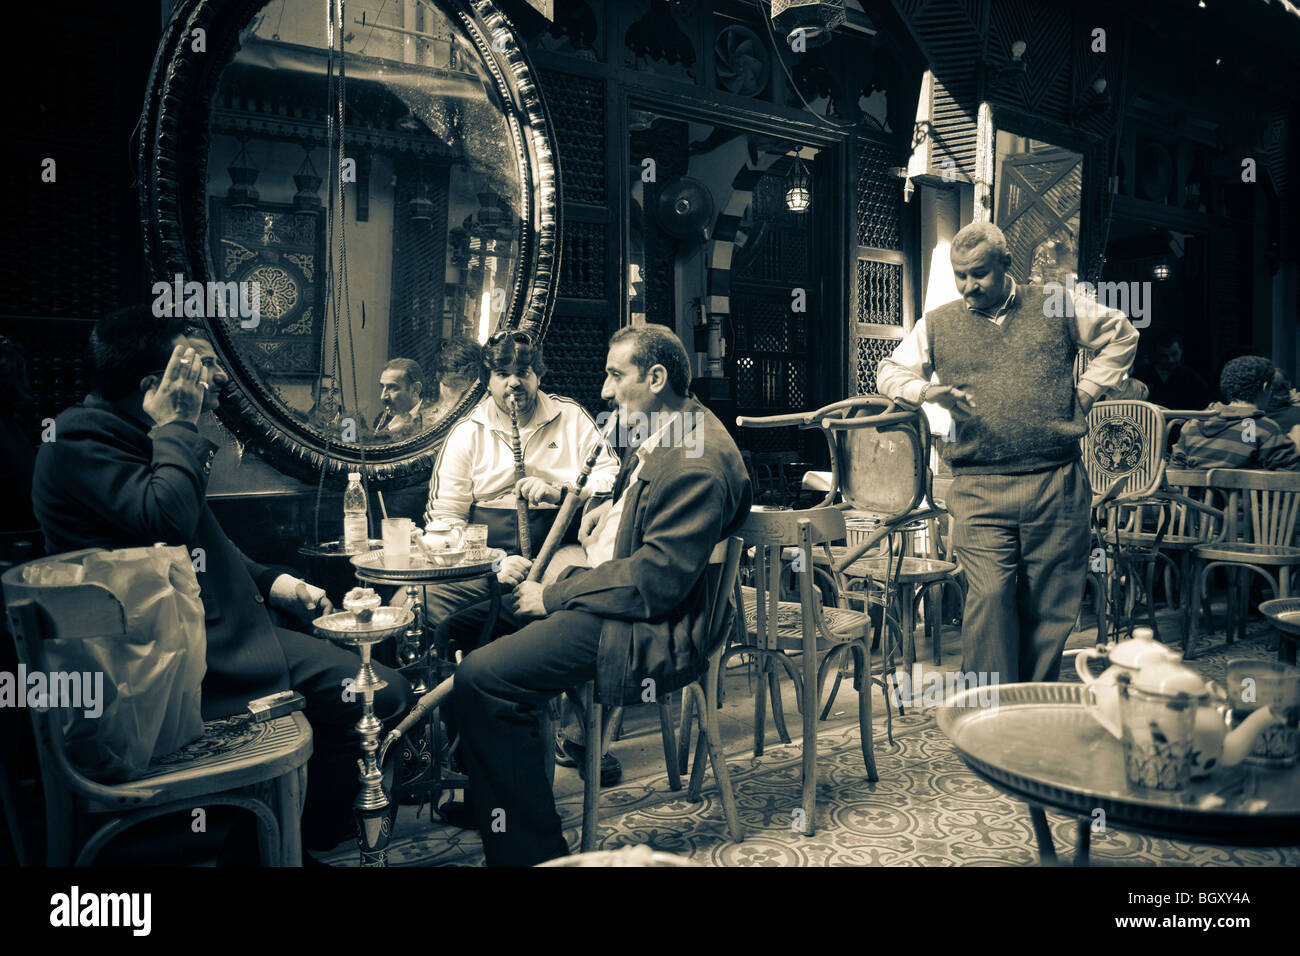 Men smoking a hooka pipe at a cafe Stock Photo